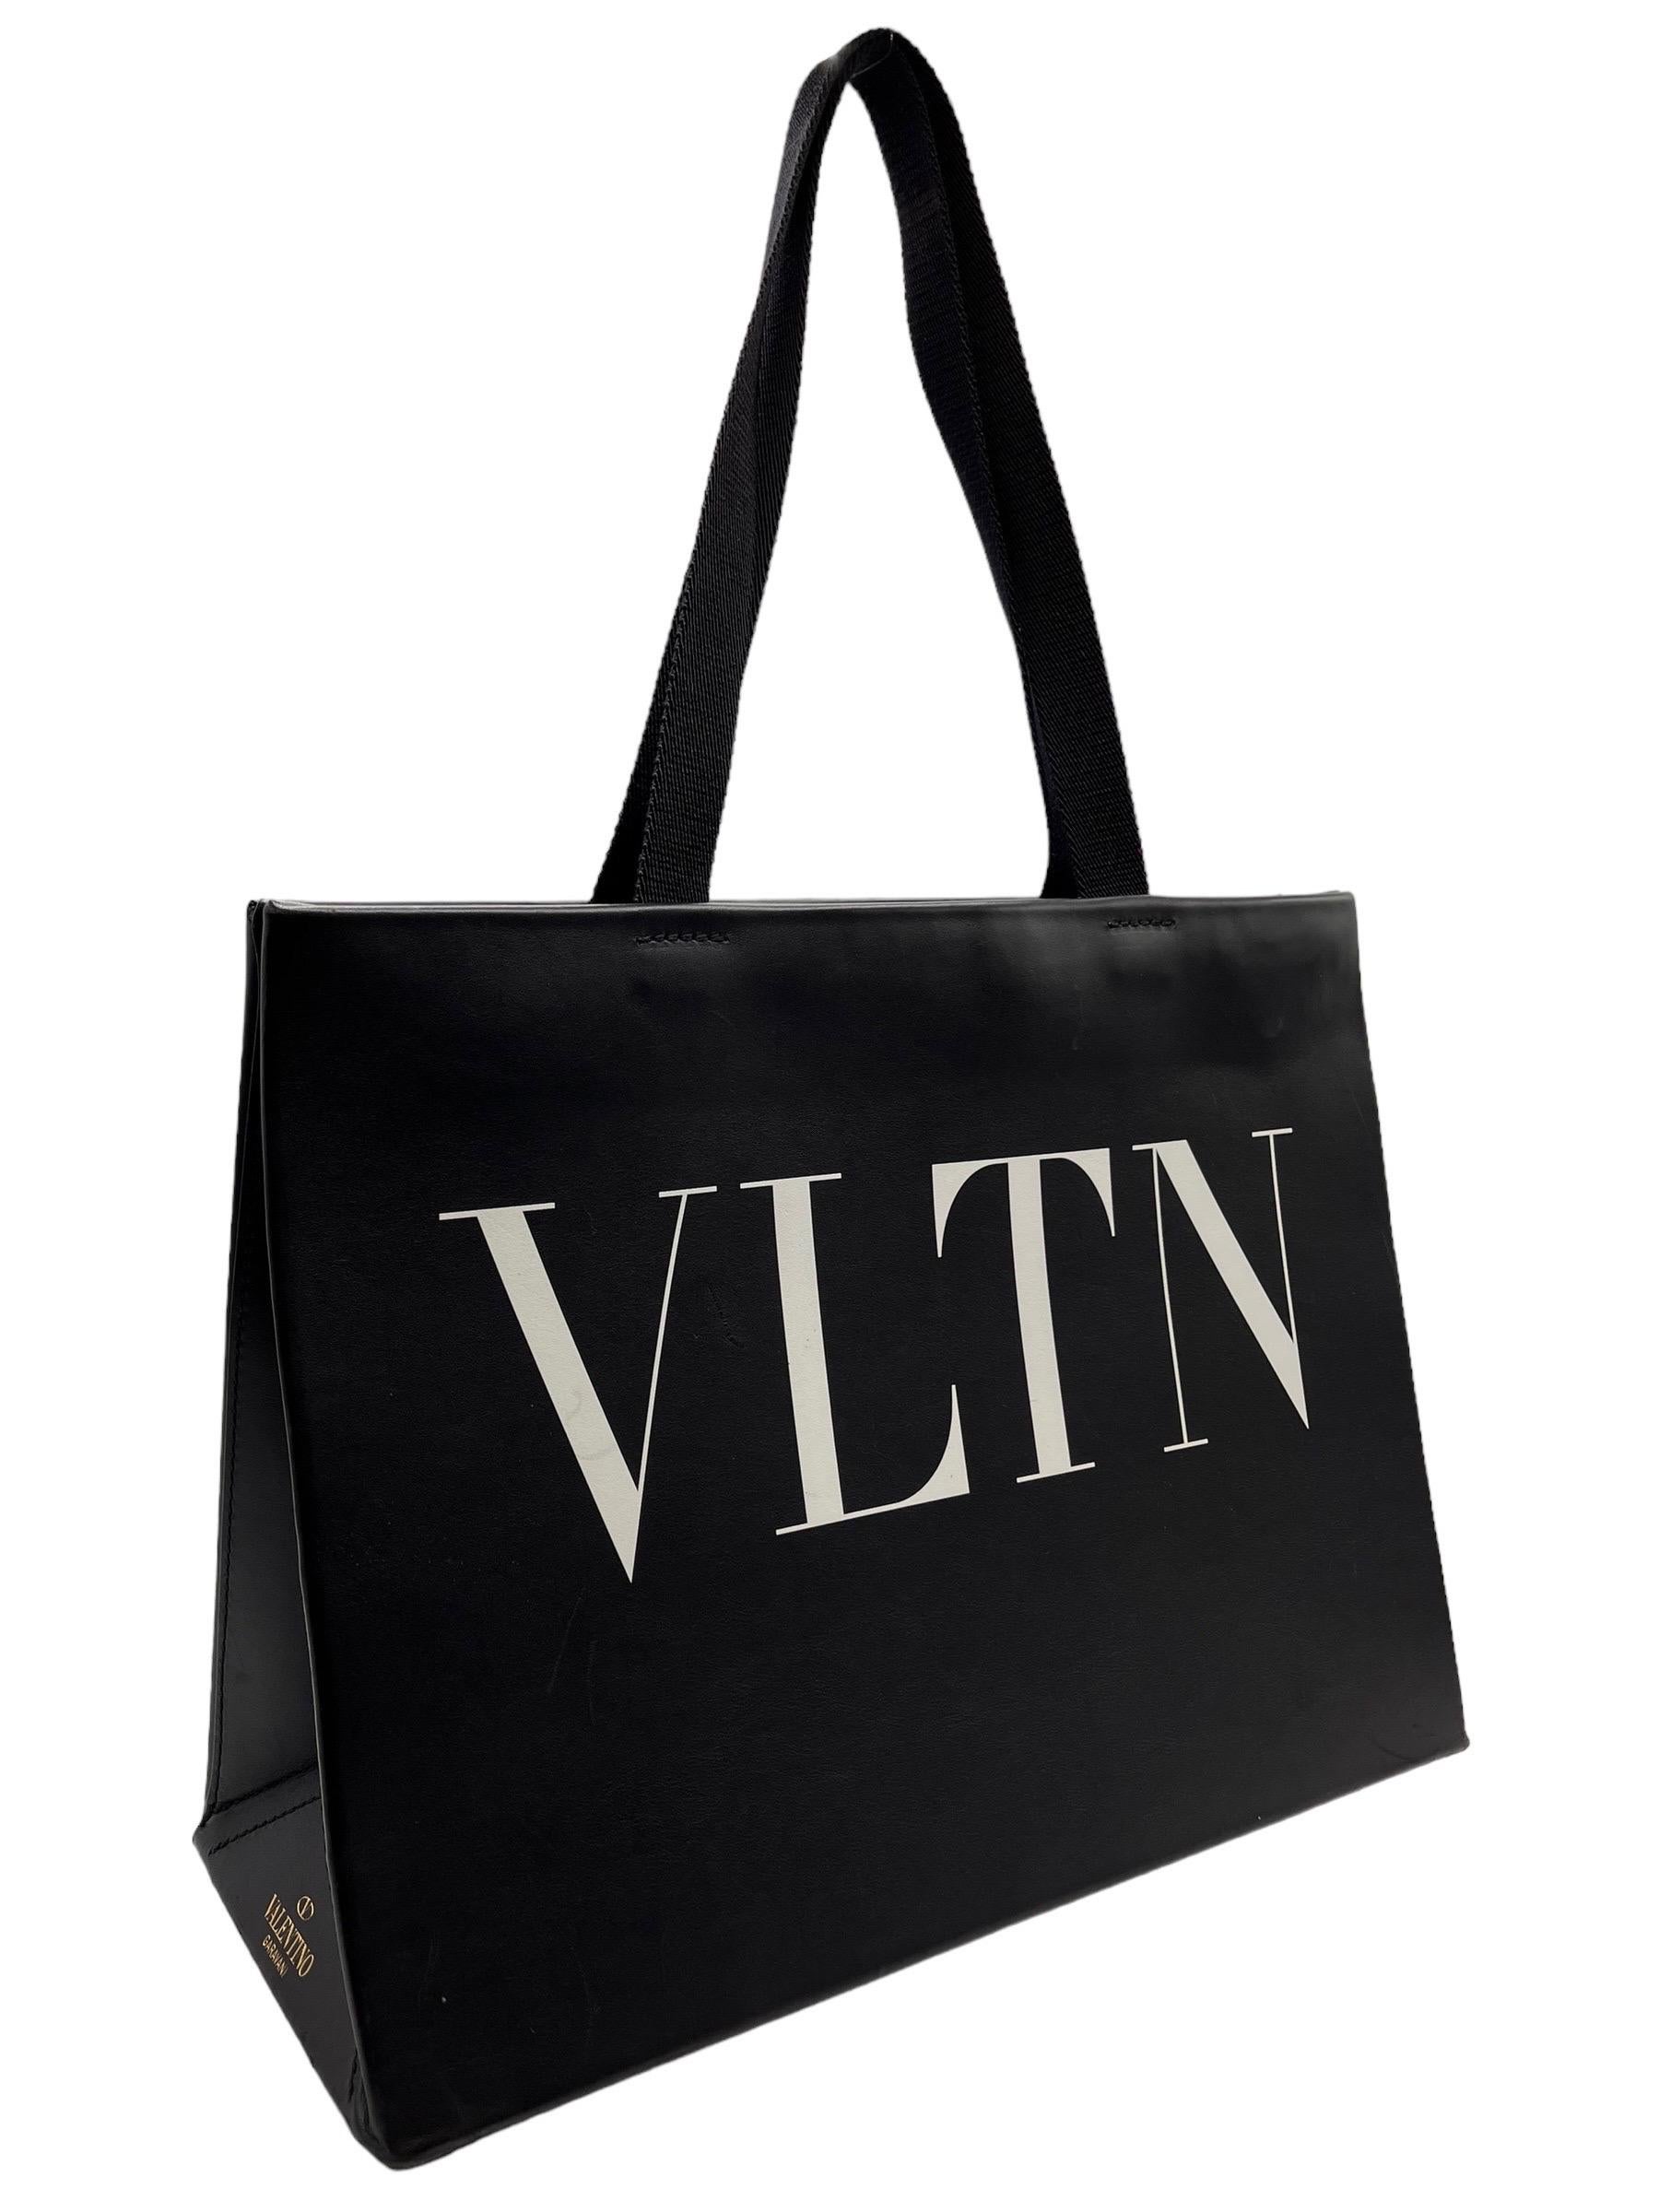 Women's Borsa A Spalla Valentino Shopper VLTN Rigida Nera For Sale